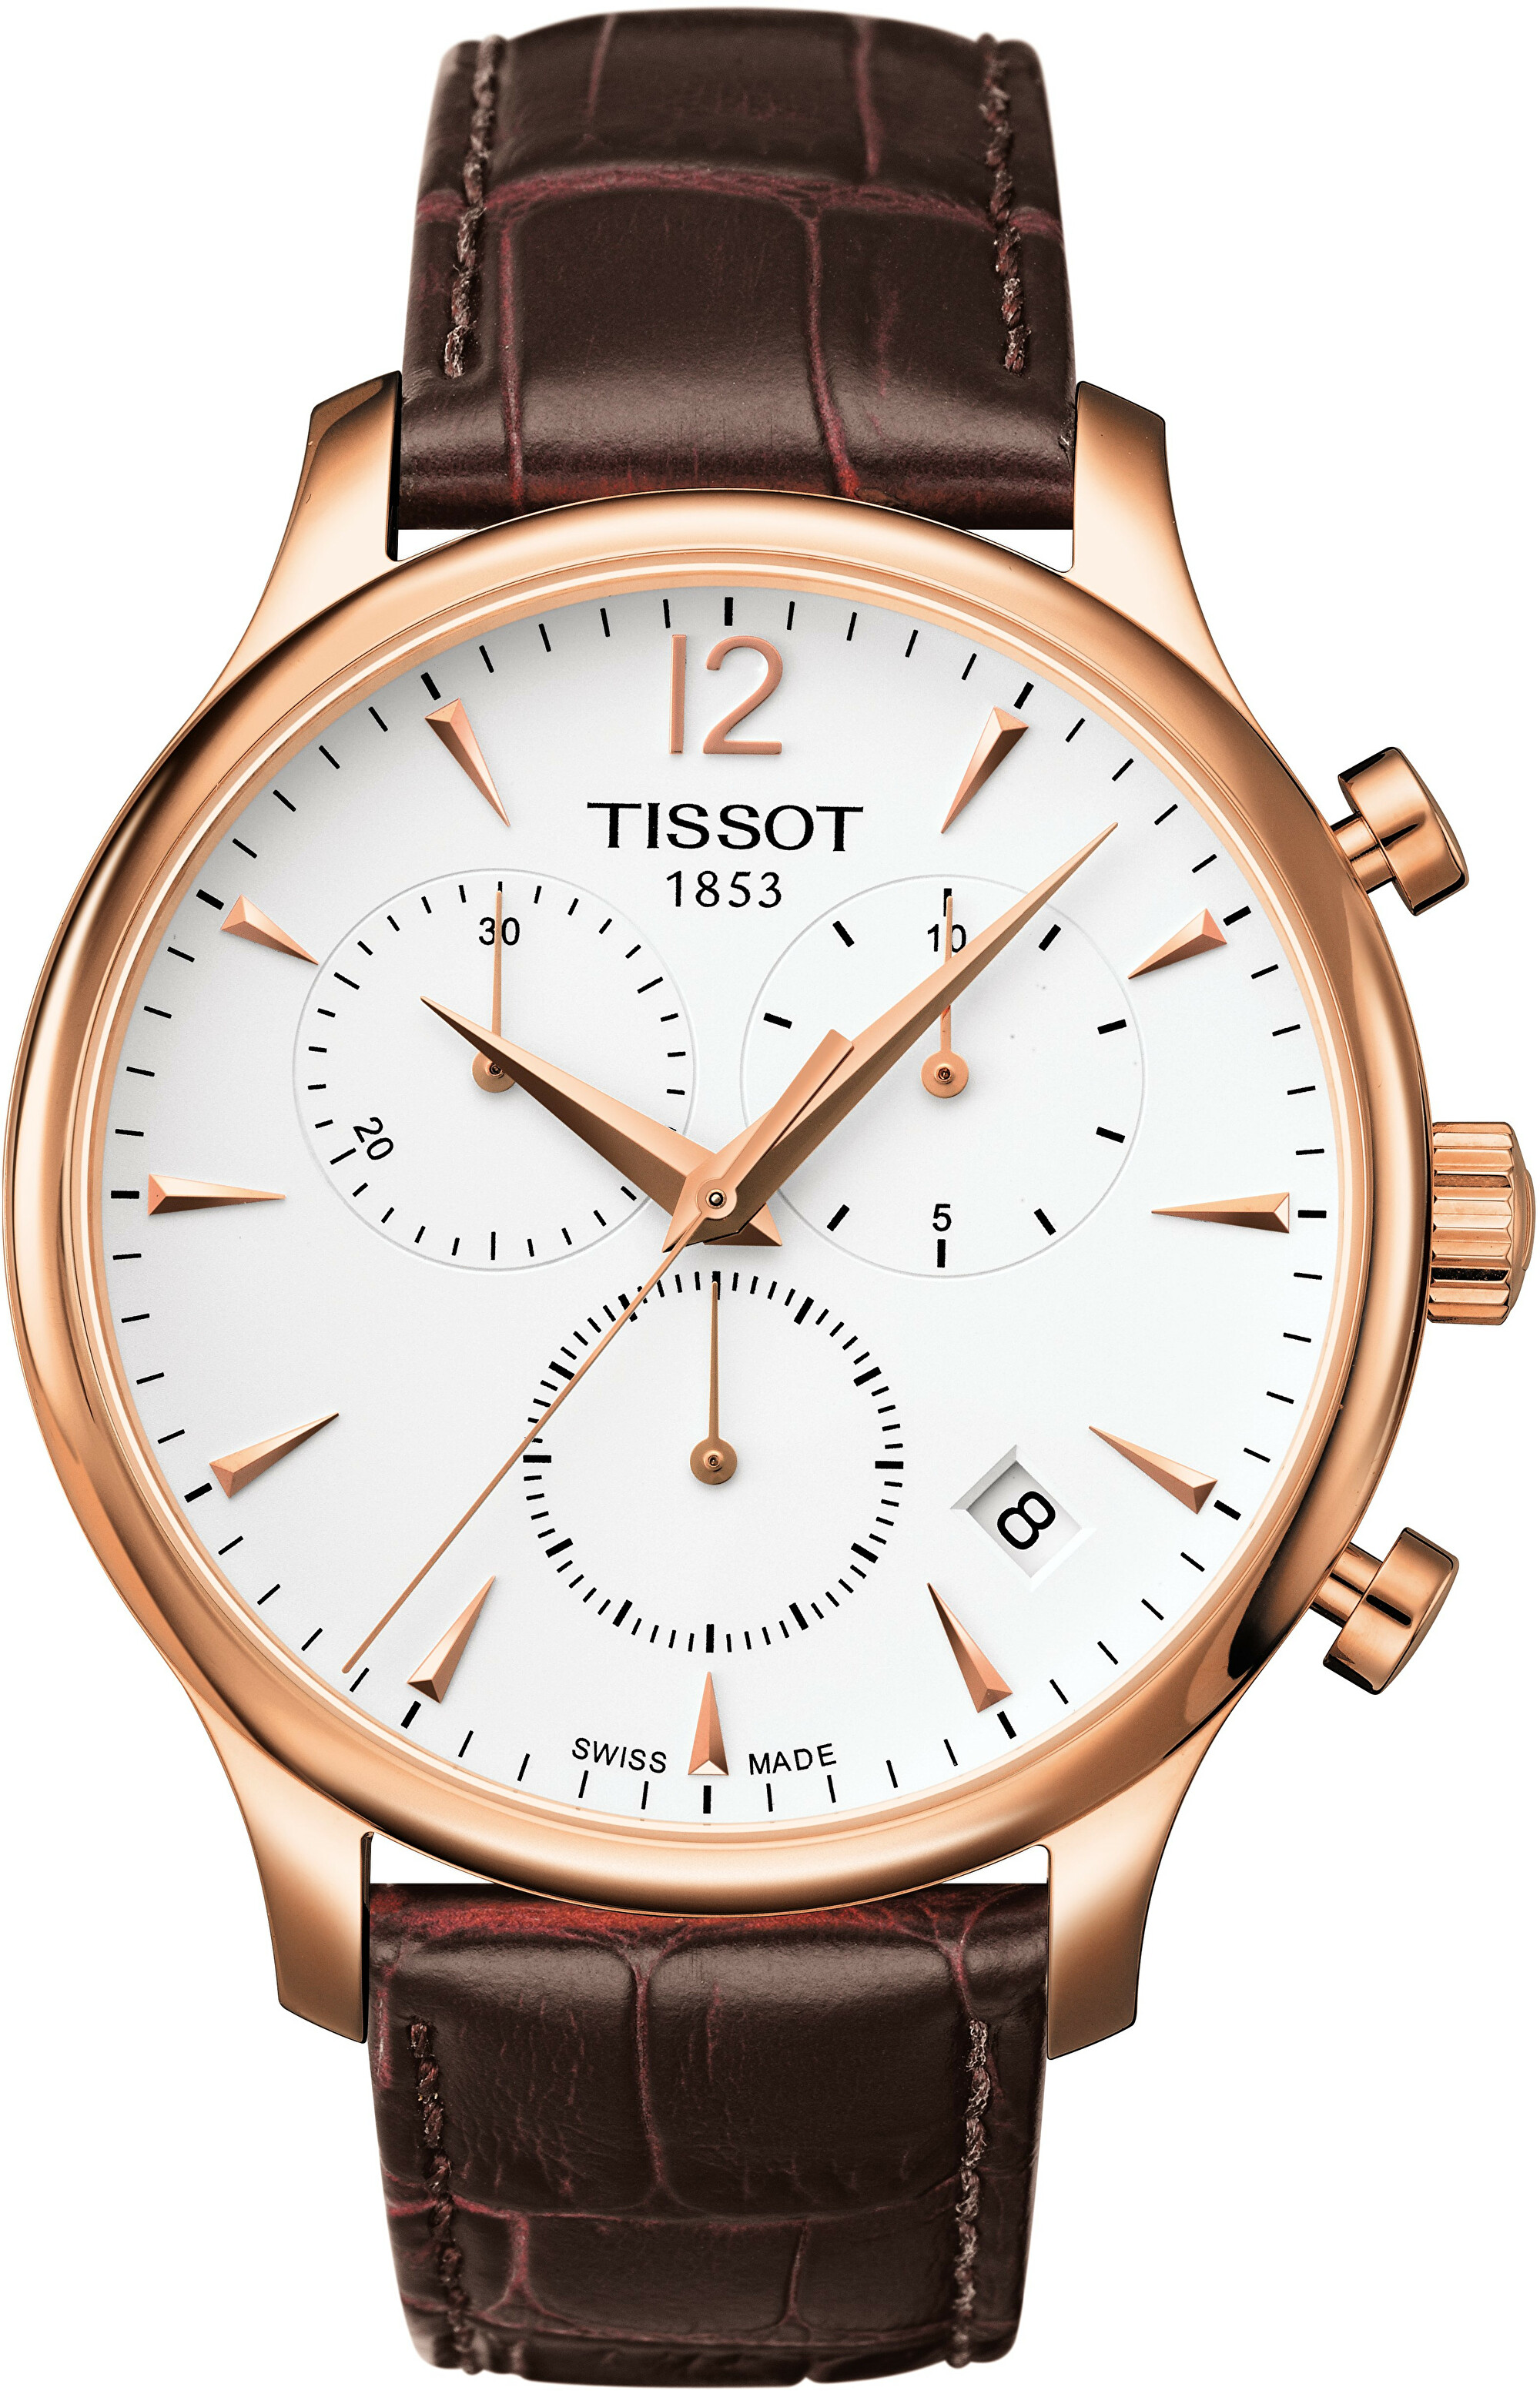 Tissot T-Tradition T063.617.36.037.00